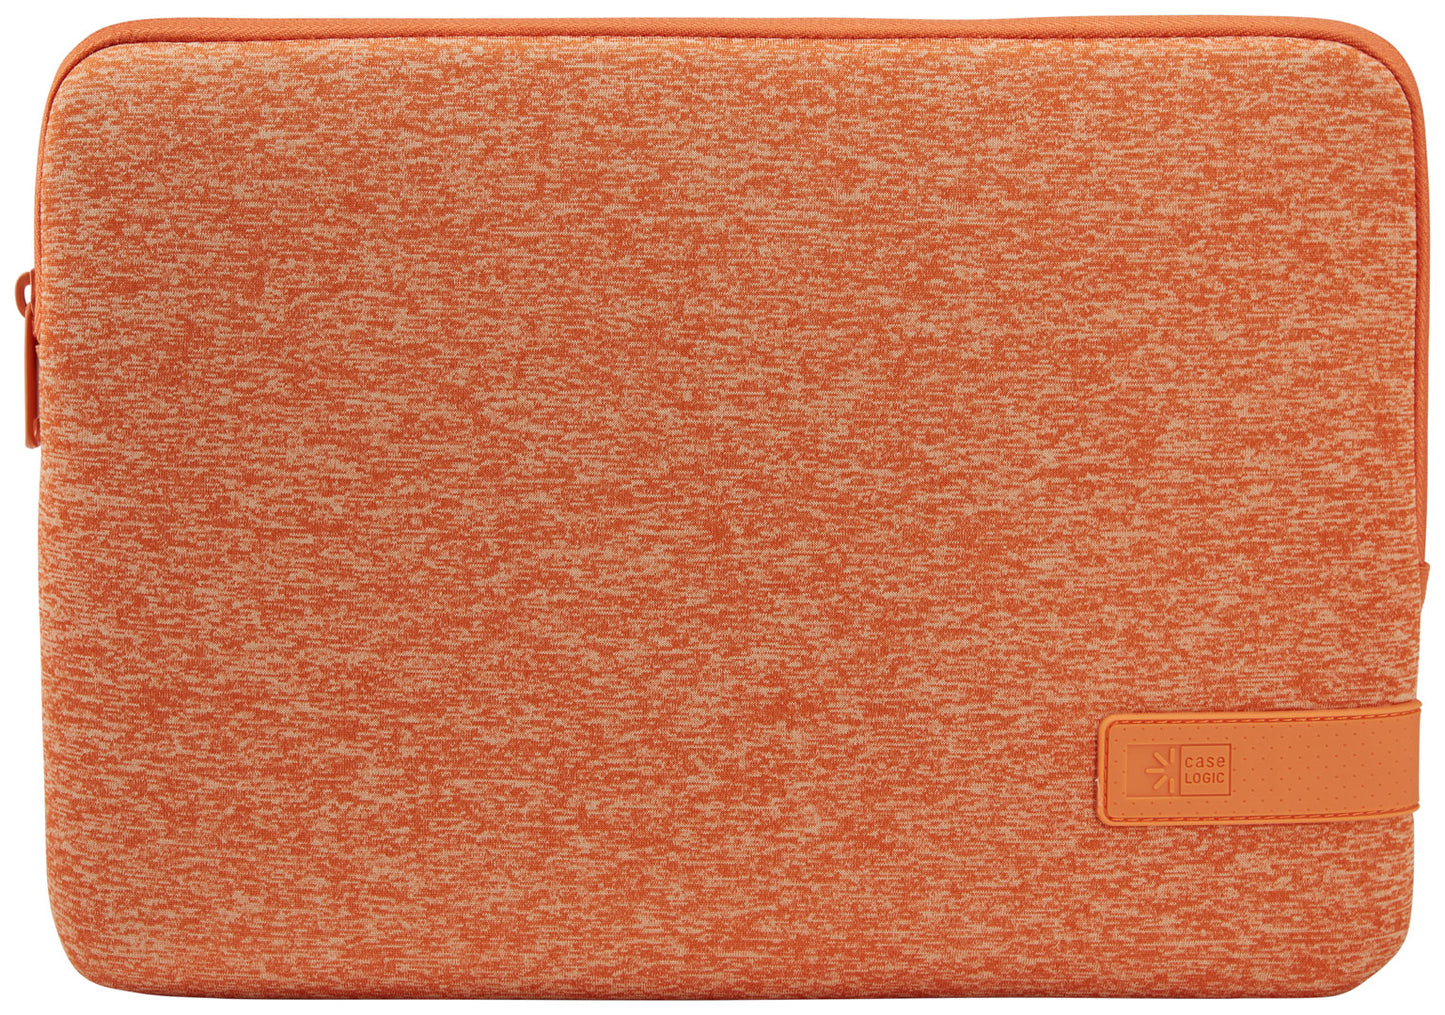 Case Logic 4692 Reflect Laptop Sleeve 13.3 REFPC-113 Coral Gold/Apricot